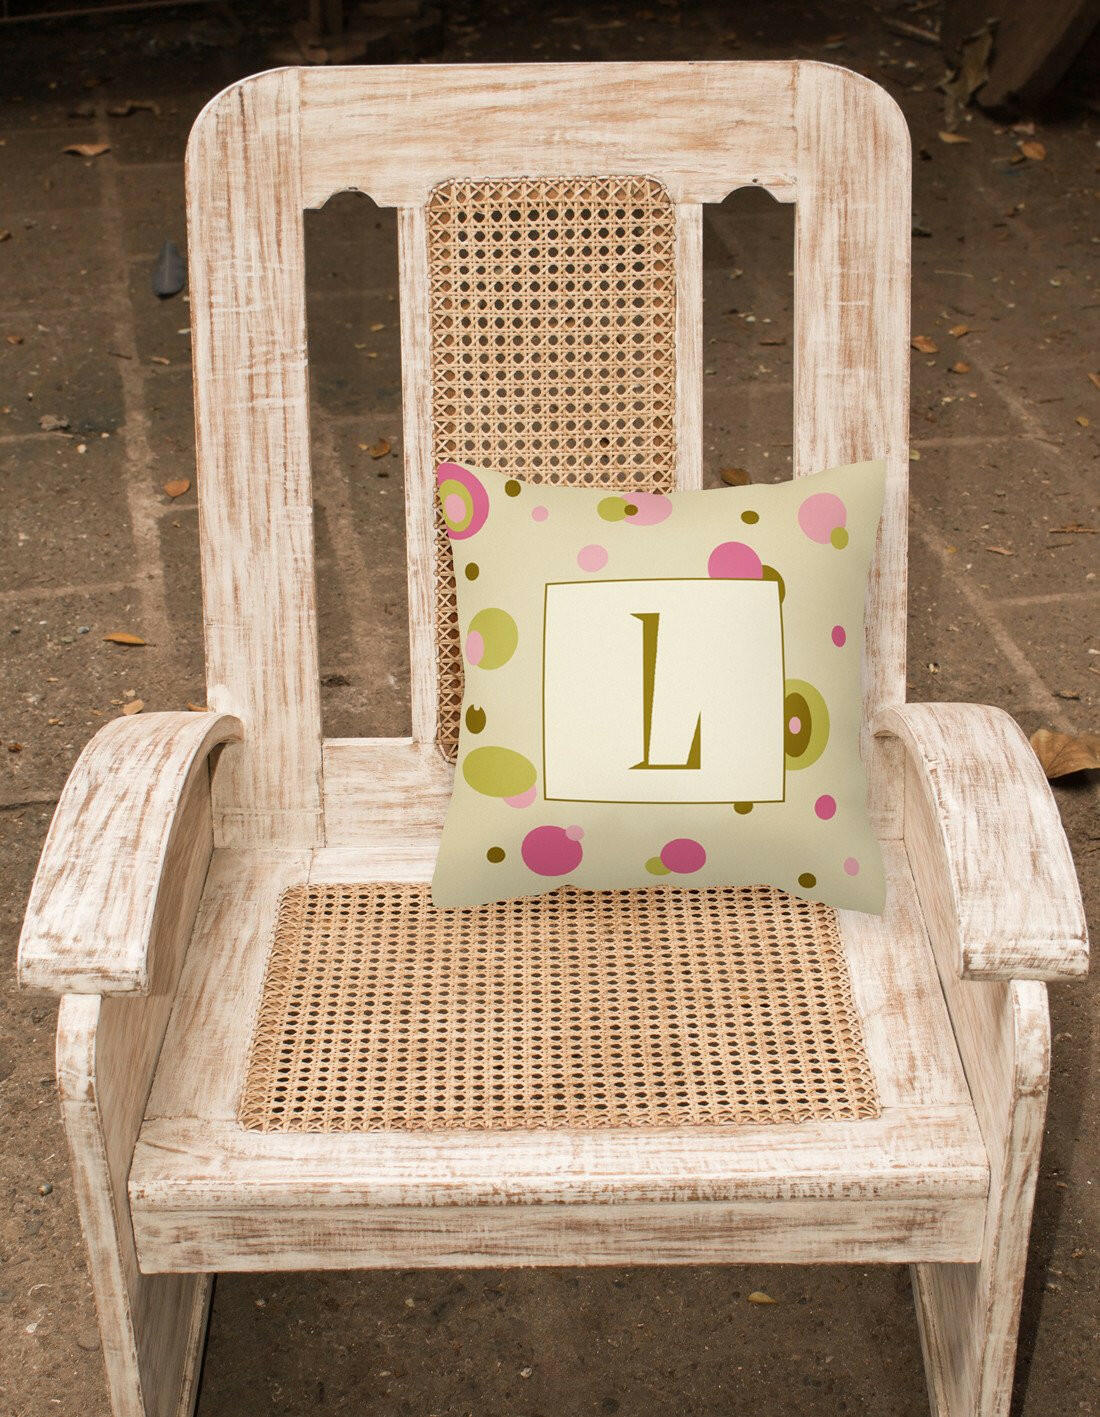 Letter L Initial Monogram - Tan Dots Decorative   Canvas Fabric Pillow - the-store.com